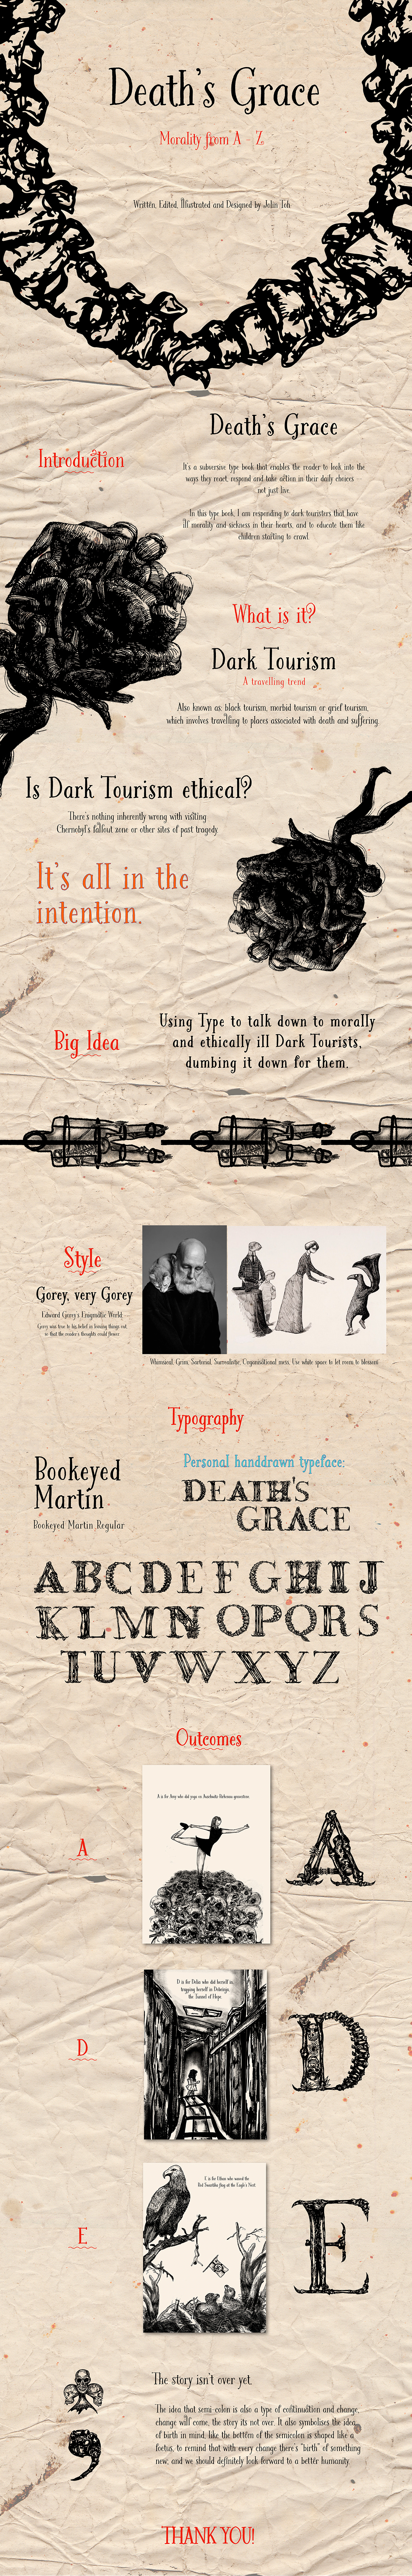 Digital Art  graphic design  ILLUSTRATION  Layout marketing   politics print publication design satire typography  